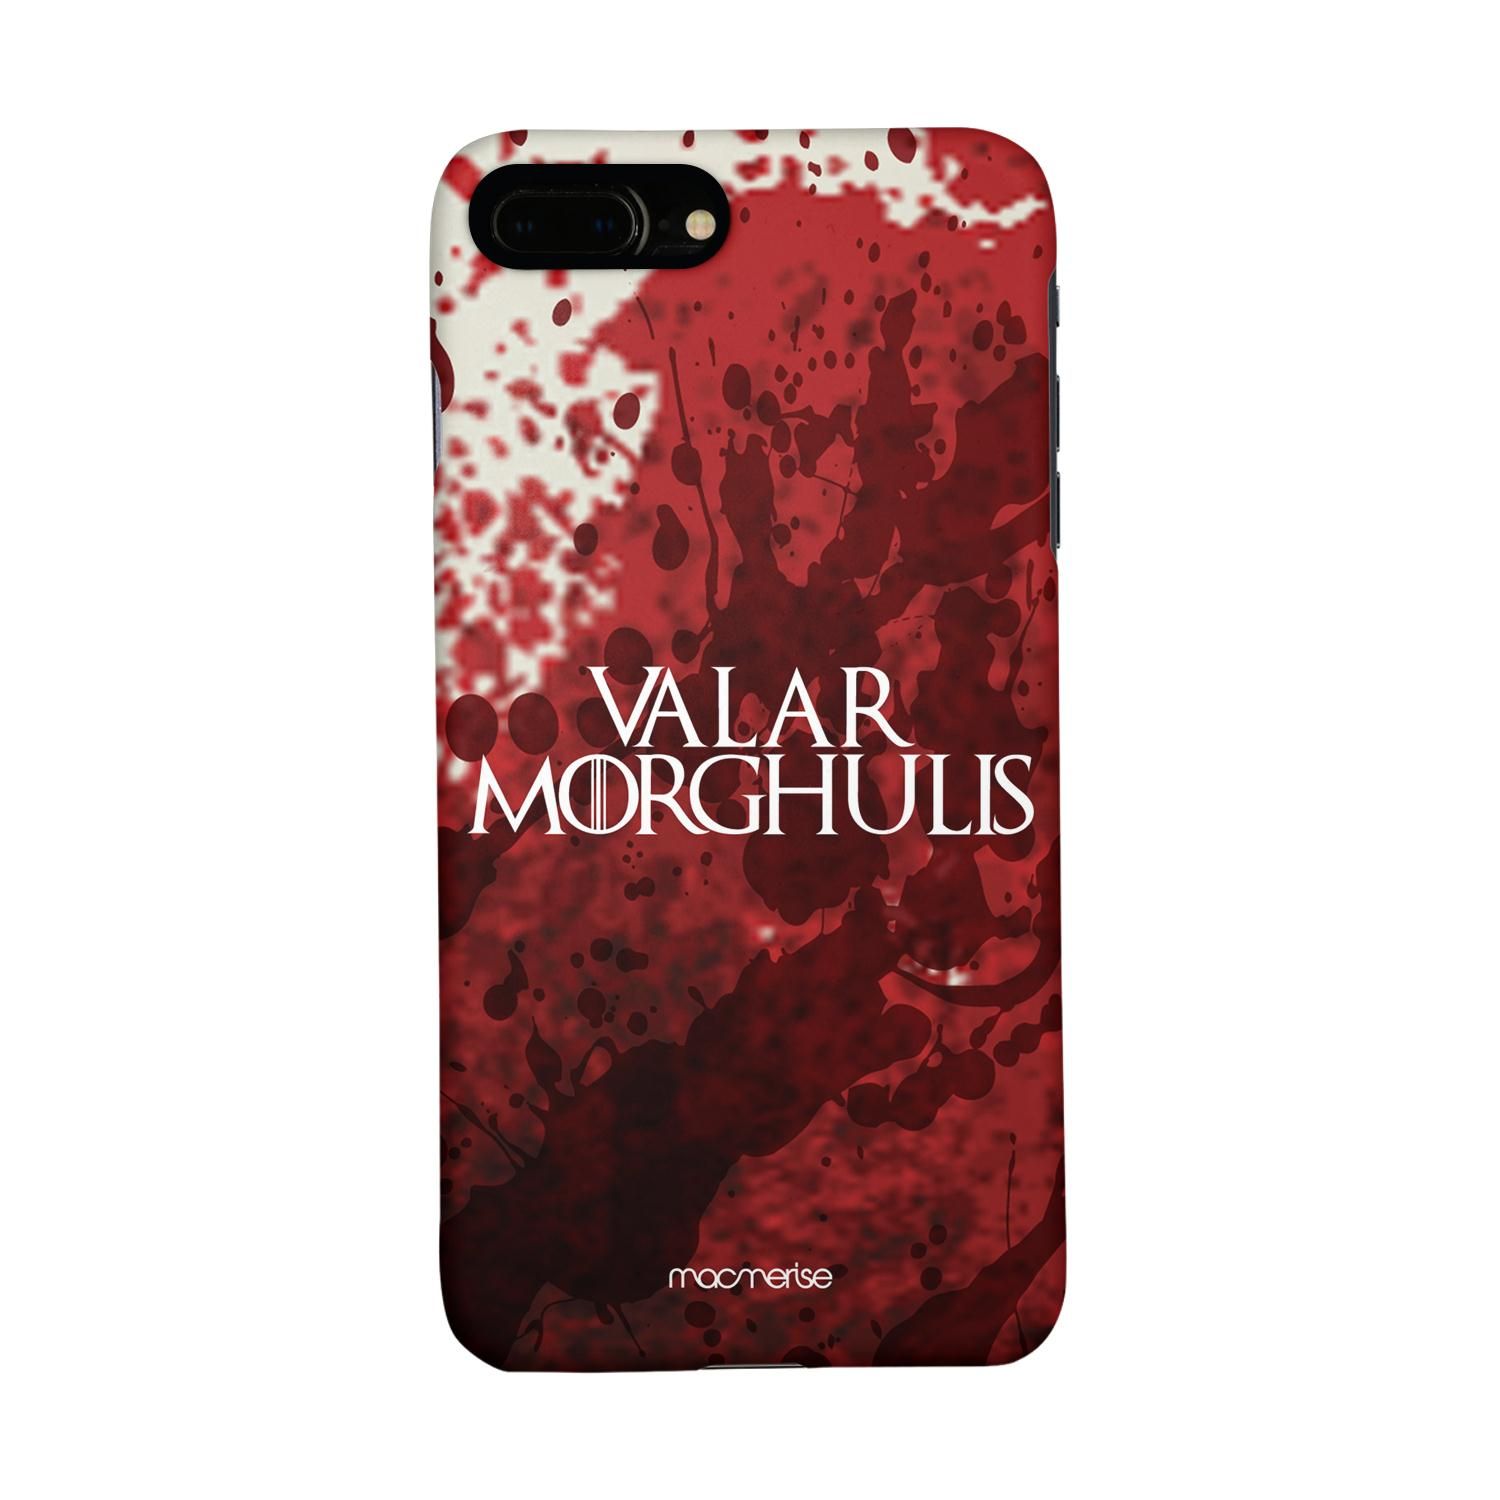 Buy Valar Morghulis - Sleek Phone Case for iPhone 7 Plus Online